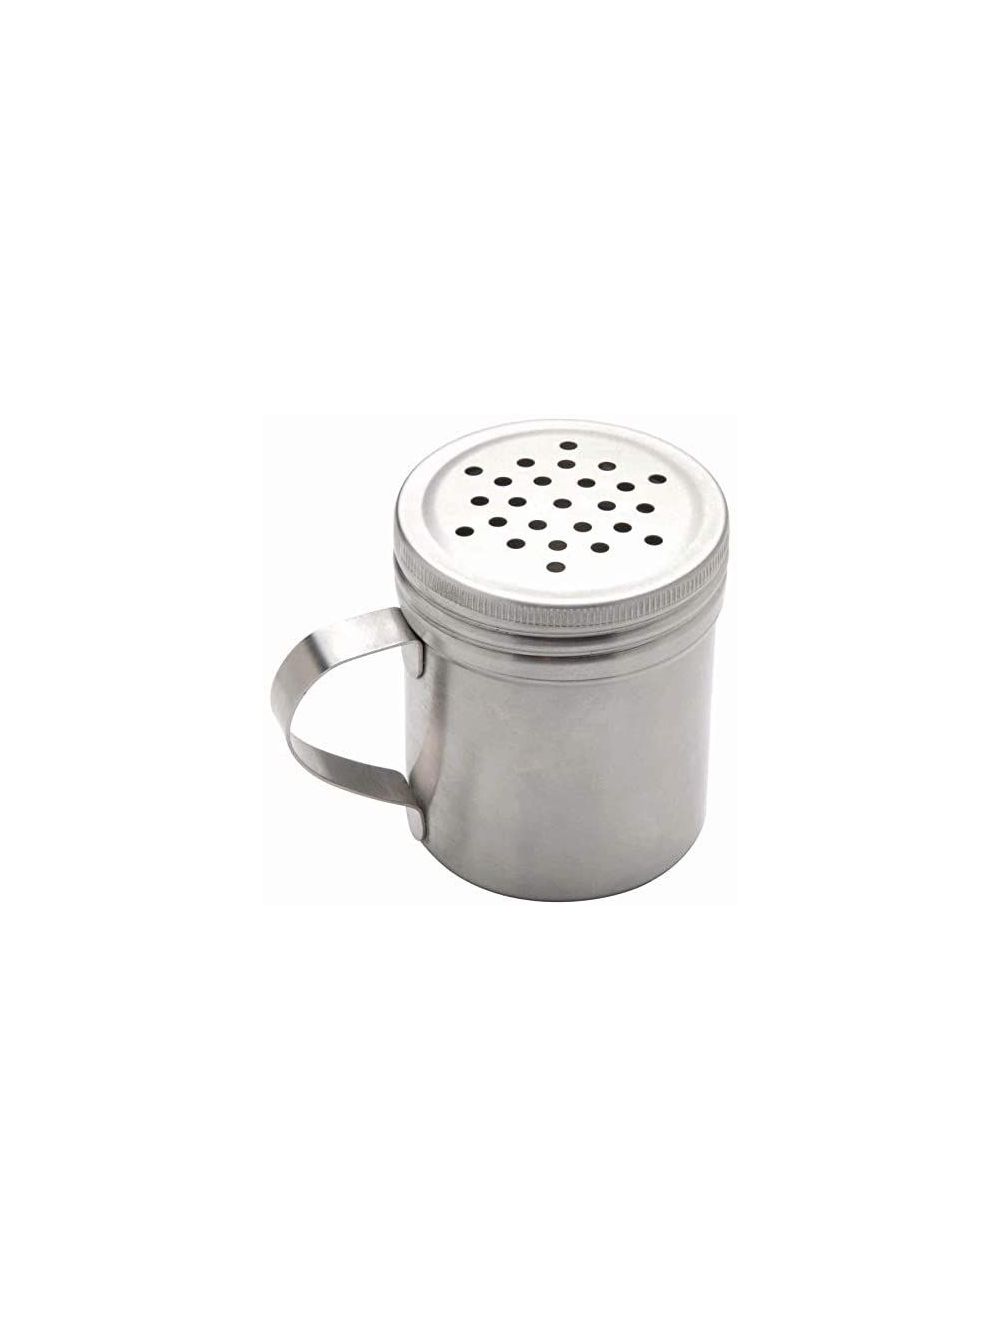 Raj Herb & Spice Mills Dispenser, Silver, CSD005